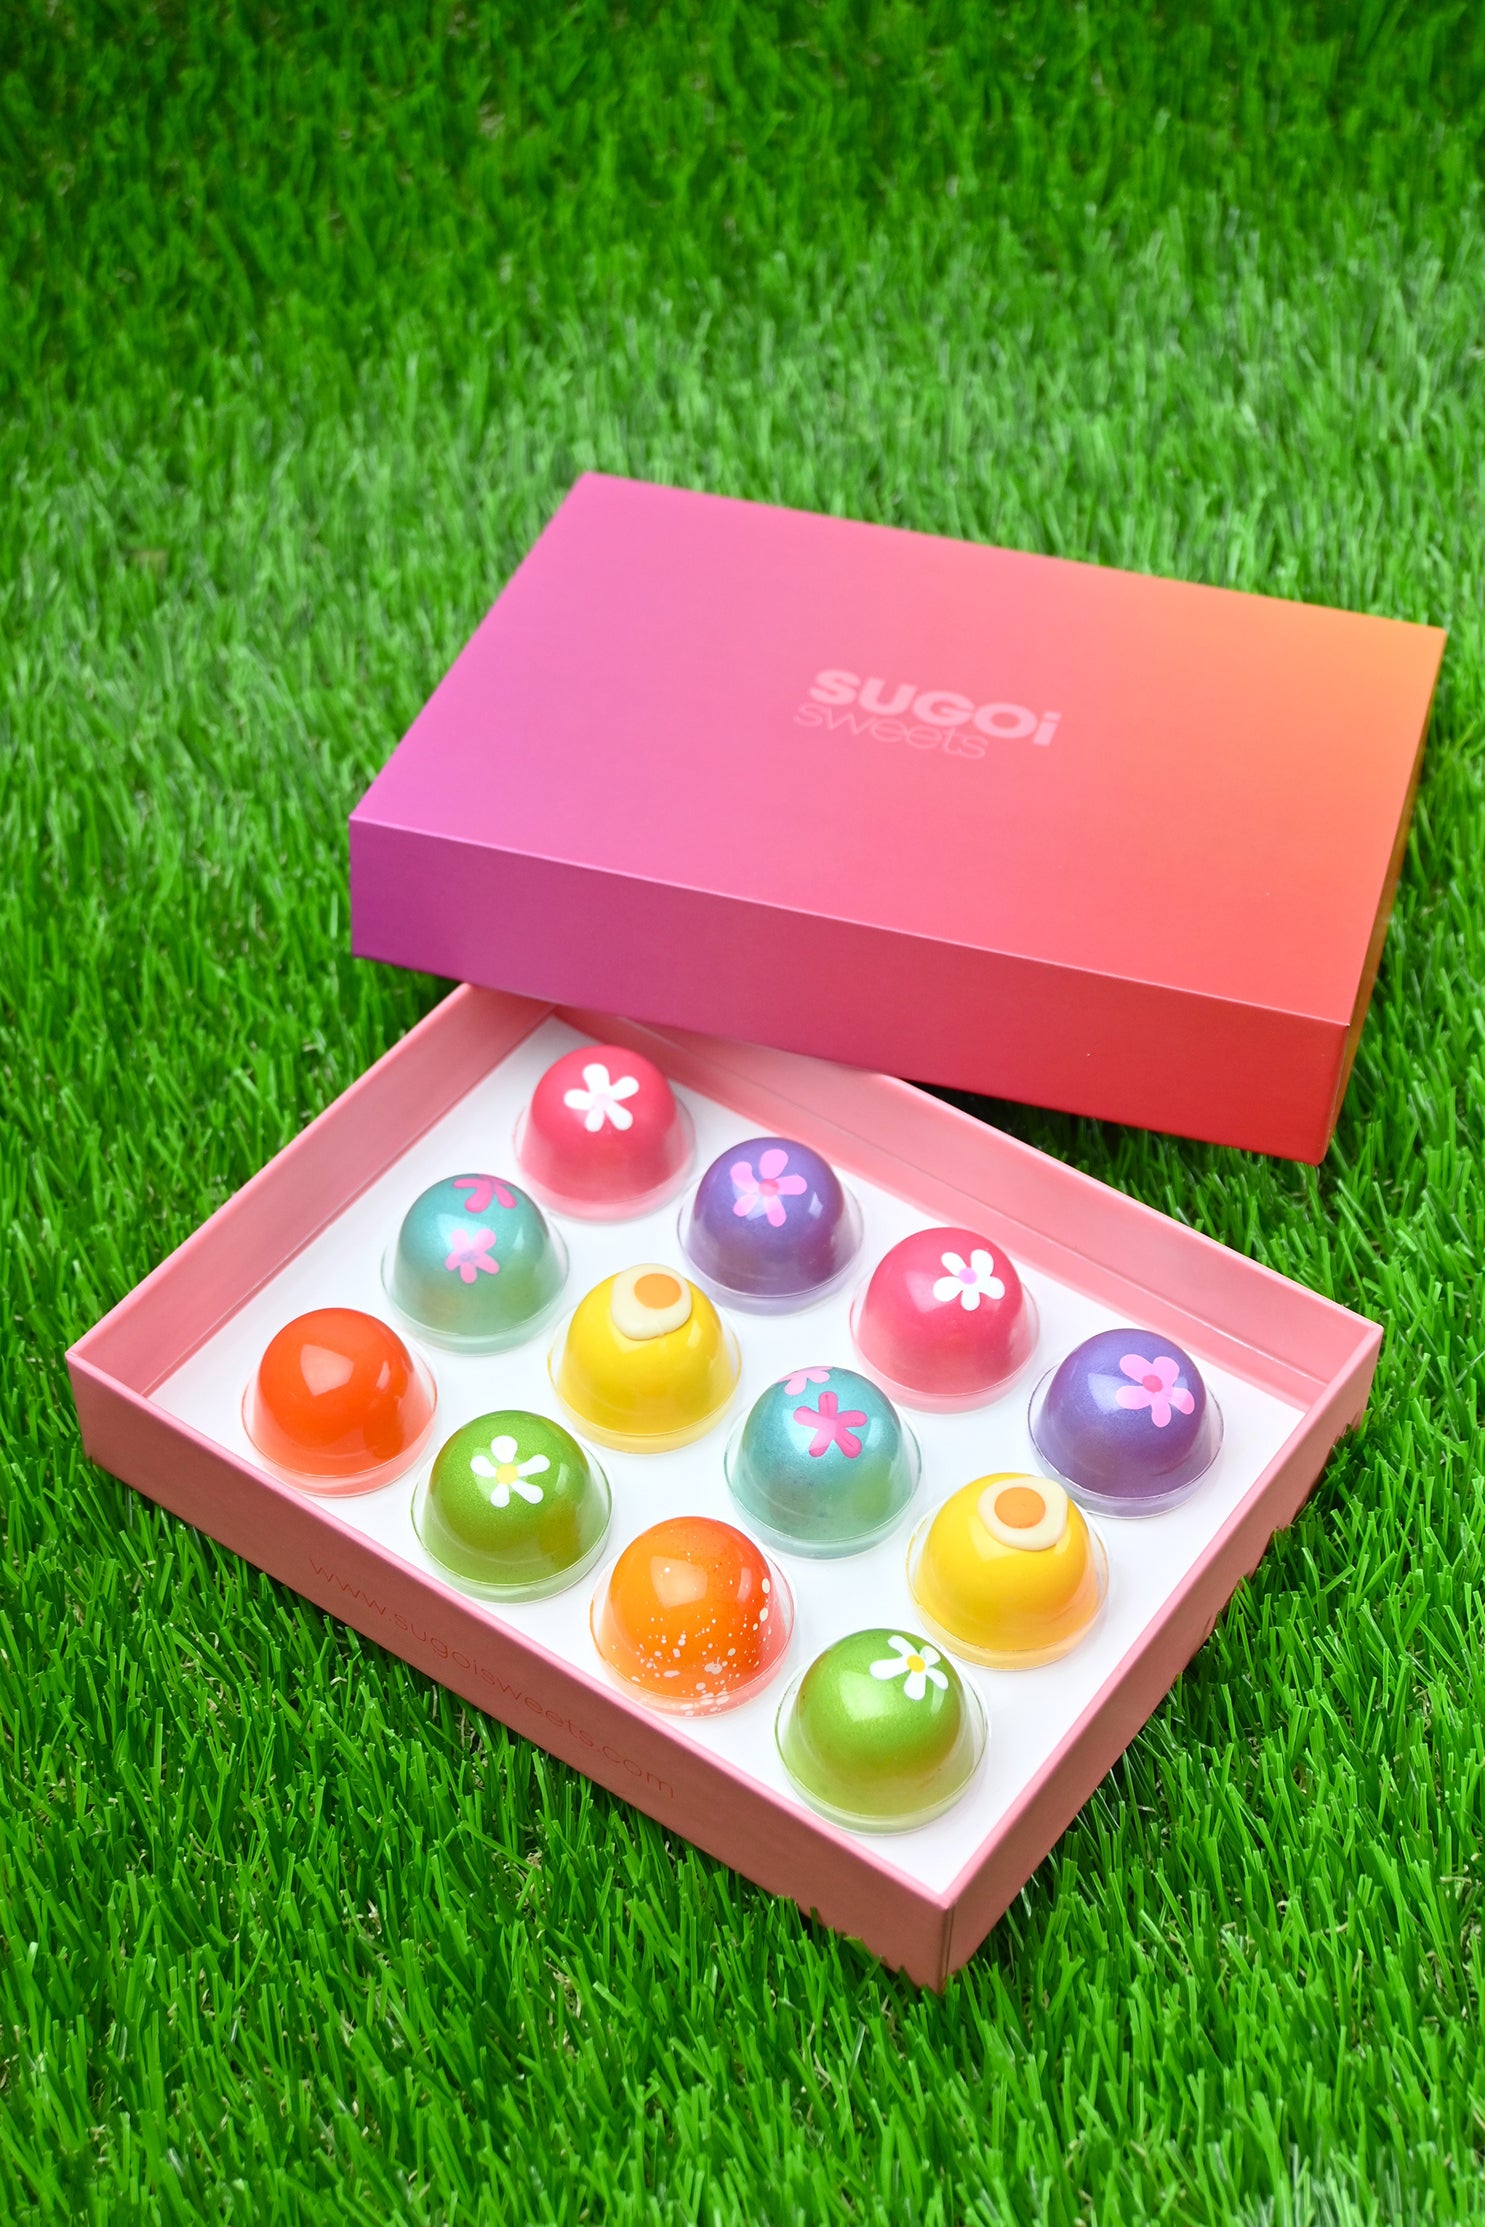 SUGOI SWEET-SPRING BONBON BOX